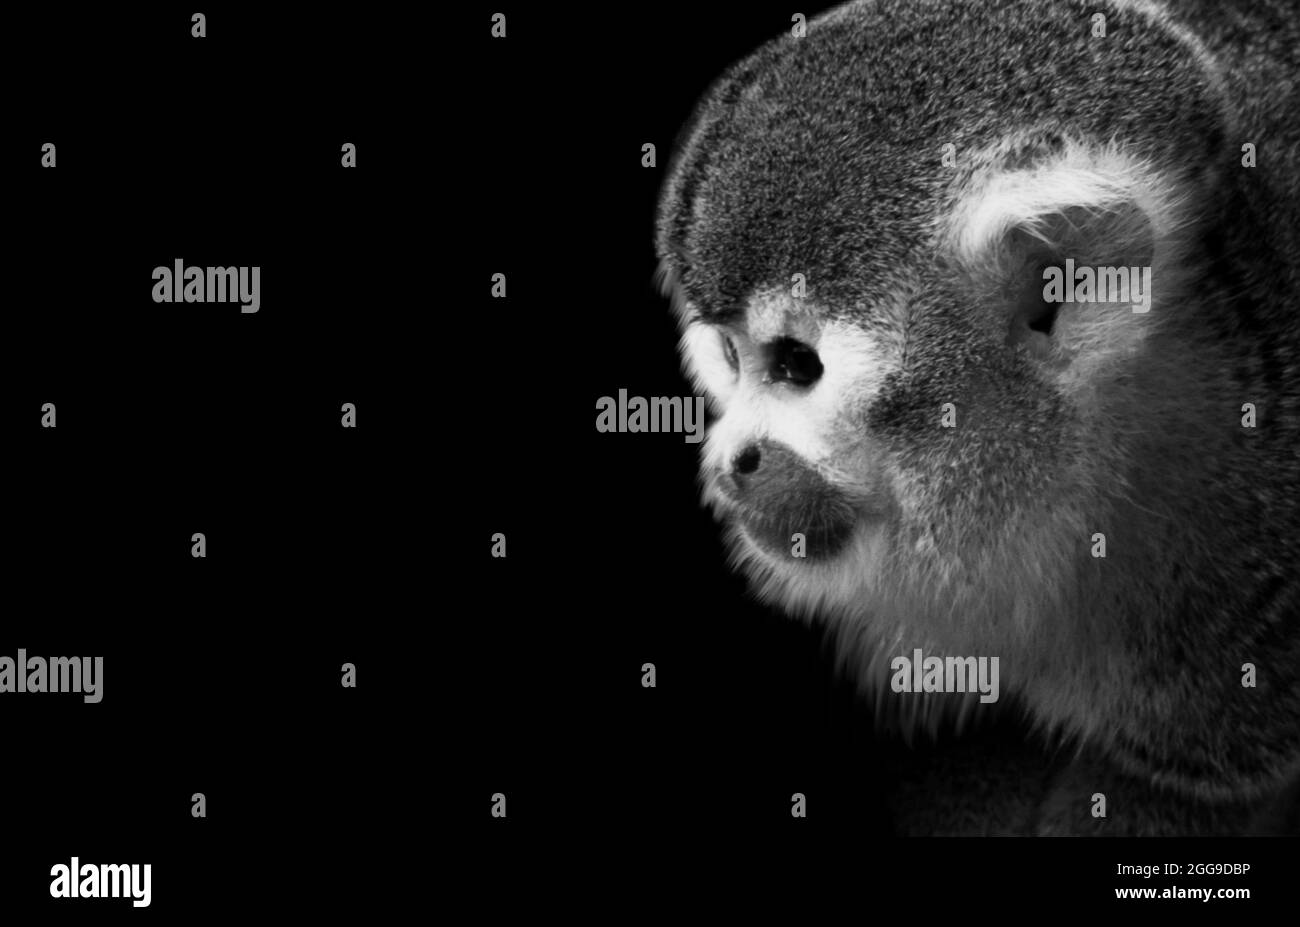 Cute Little Squirrel Monkey Closeup Face Stock Photo